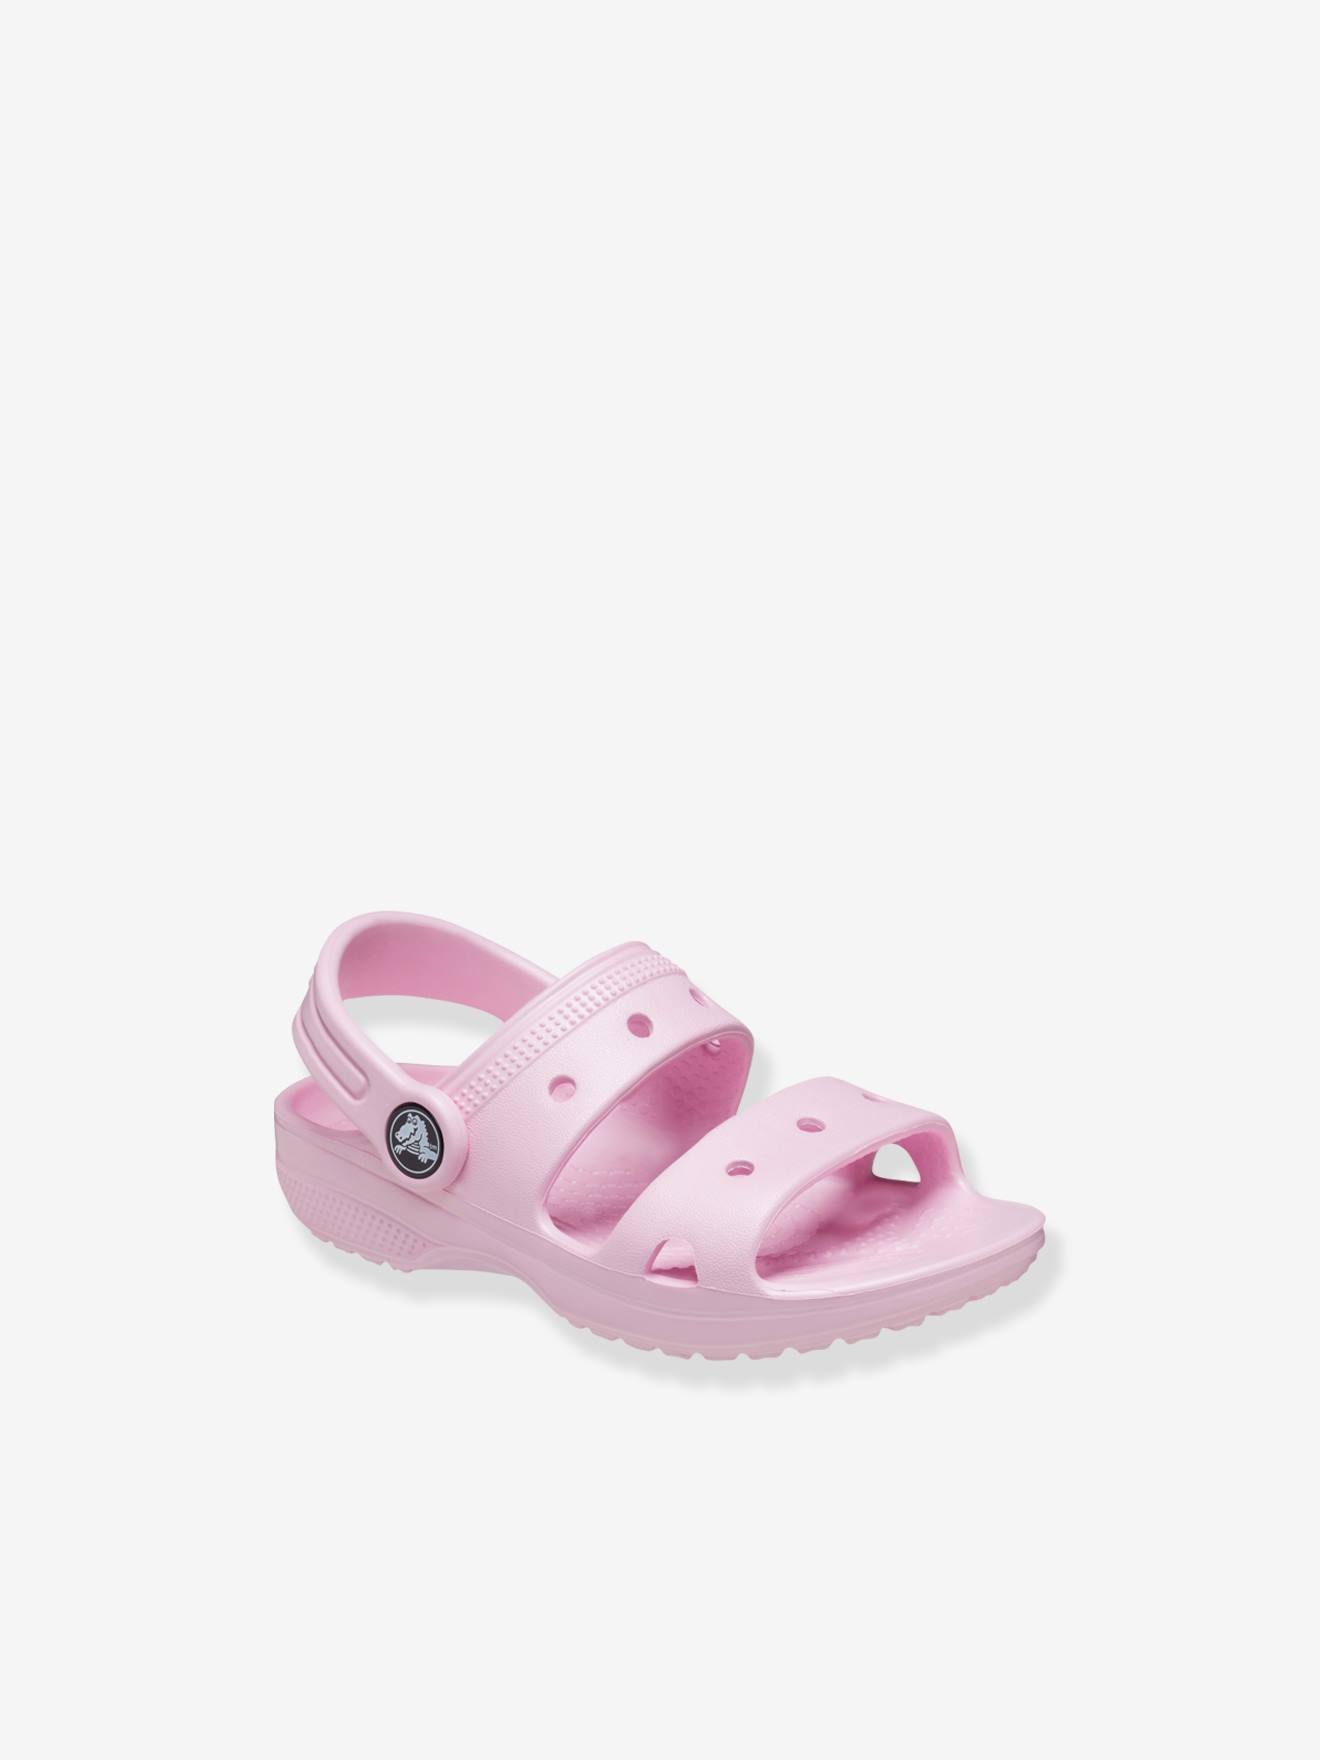 Sandalias bebé Sandal T CROCS™ rosa claro liso - Crocs